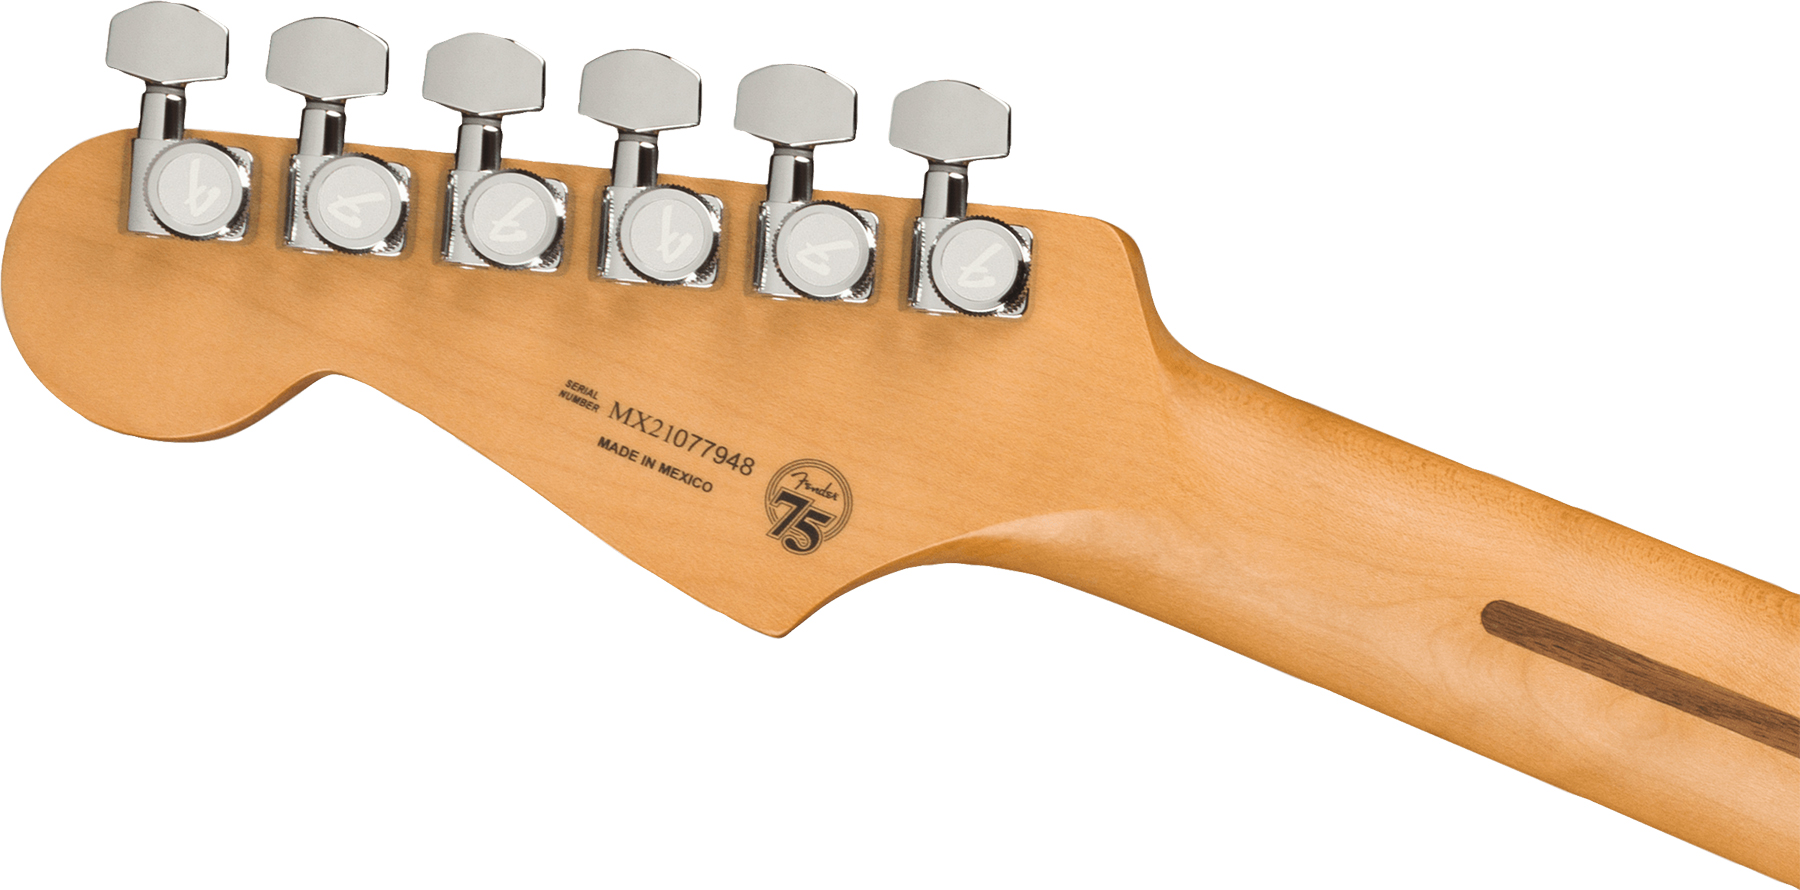 Fender Strat Player Plus Mex 3s Trem Mn - Olympic Pearl - Guitare Électrique Forme Str - Variation 3